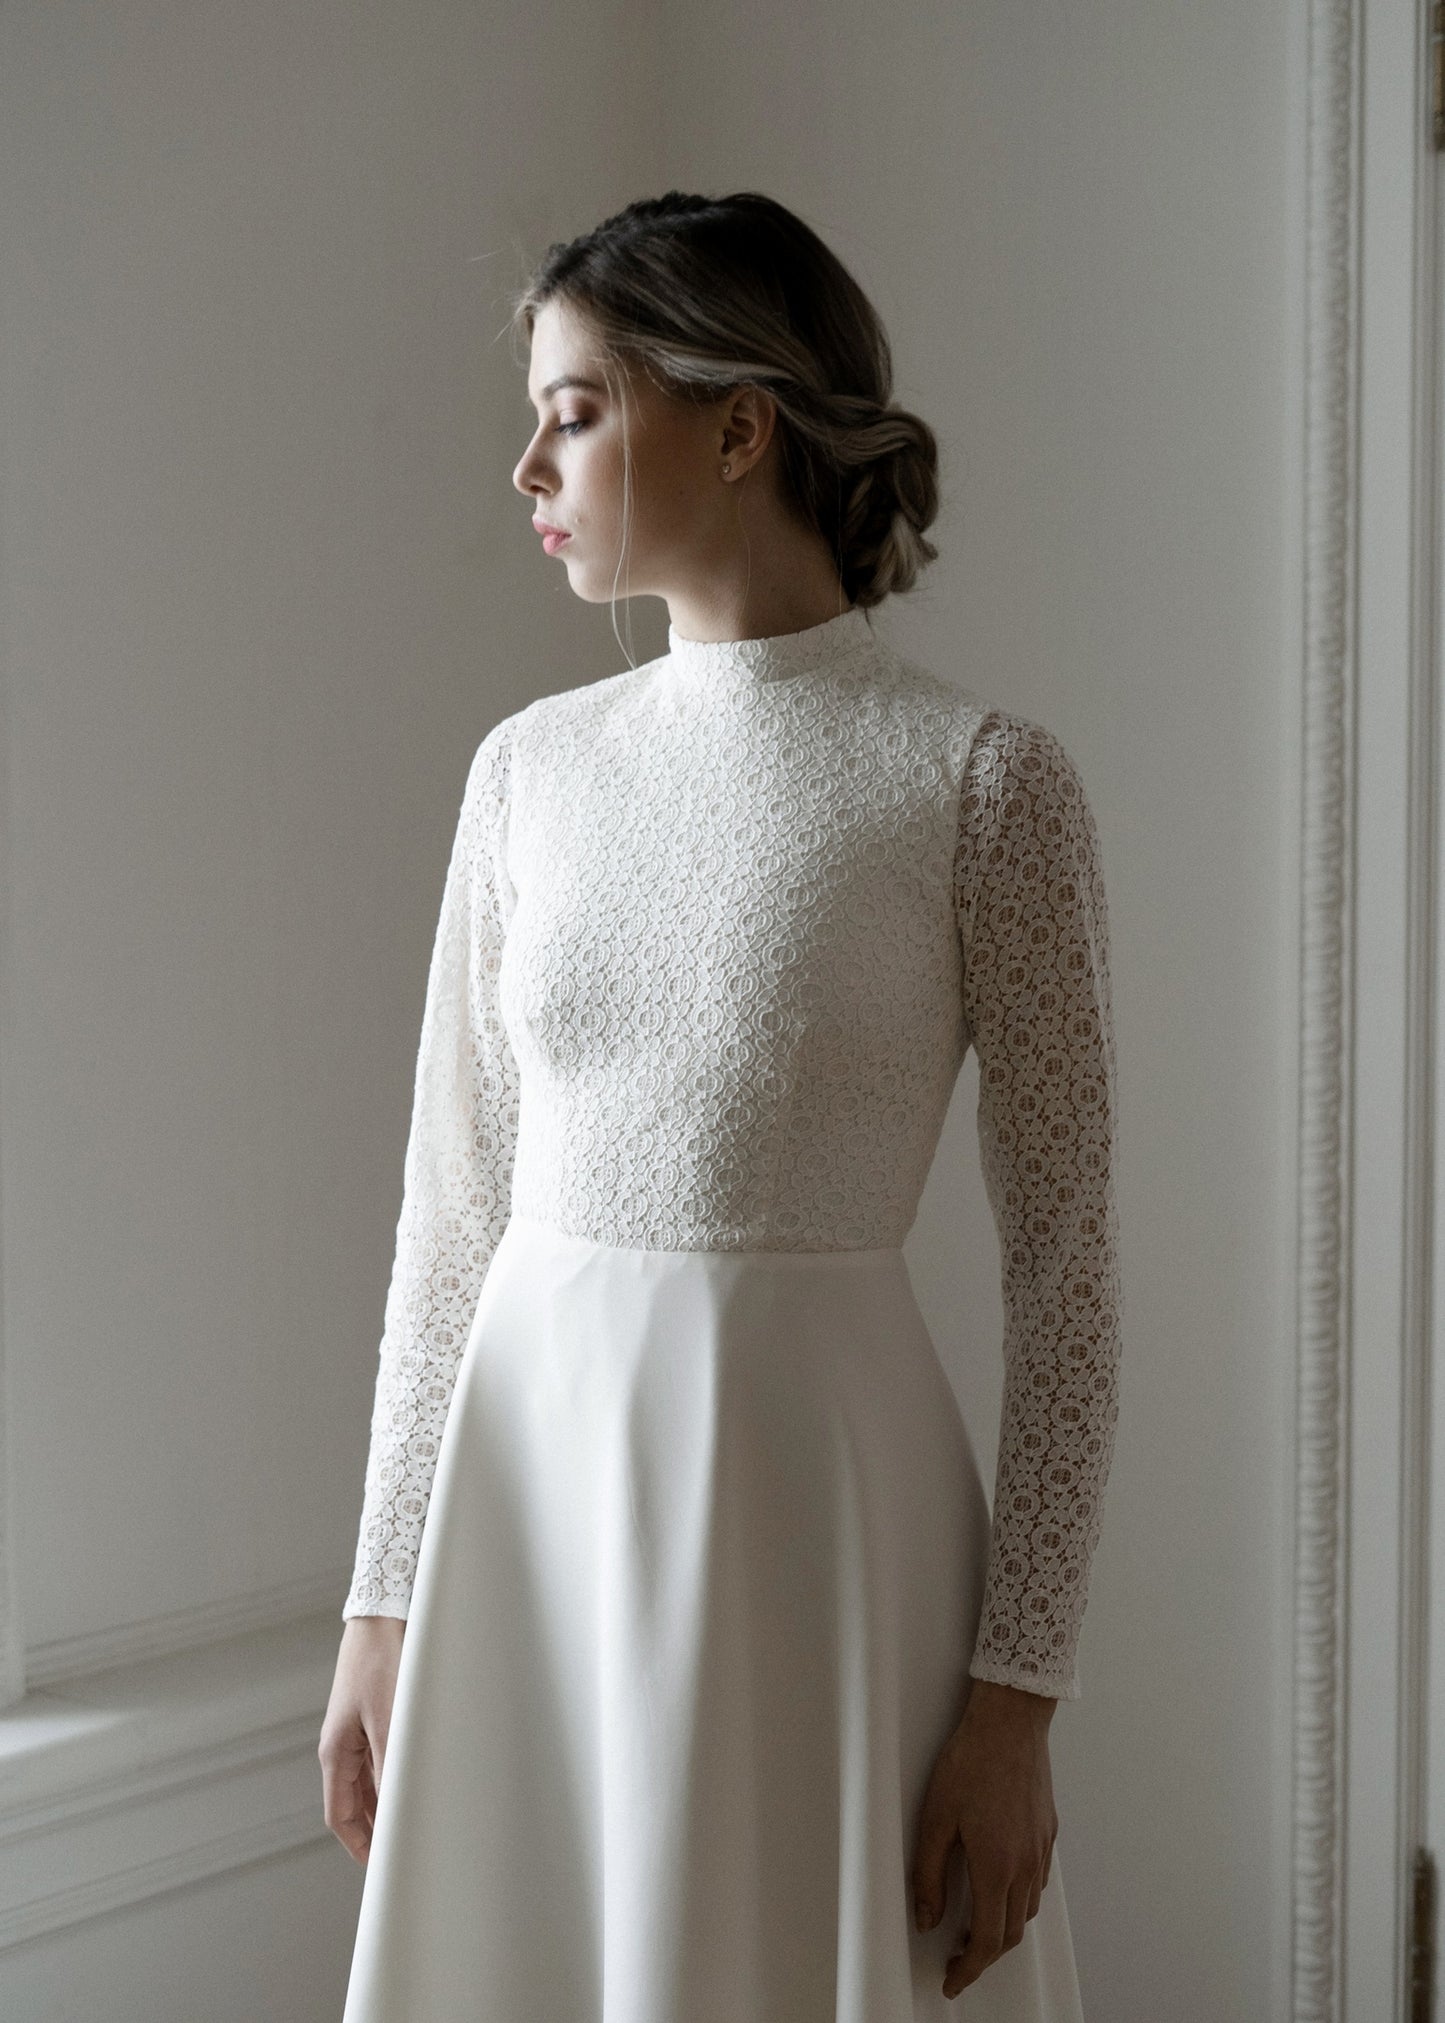 Modest wedding dress • winter wedding dress • long sleeve wedding dress • simple wedding dress • lace wedding dress • elegant minimalist bridal gown